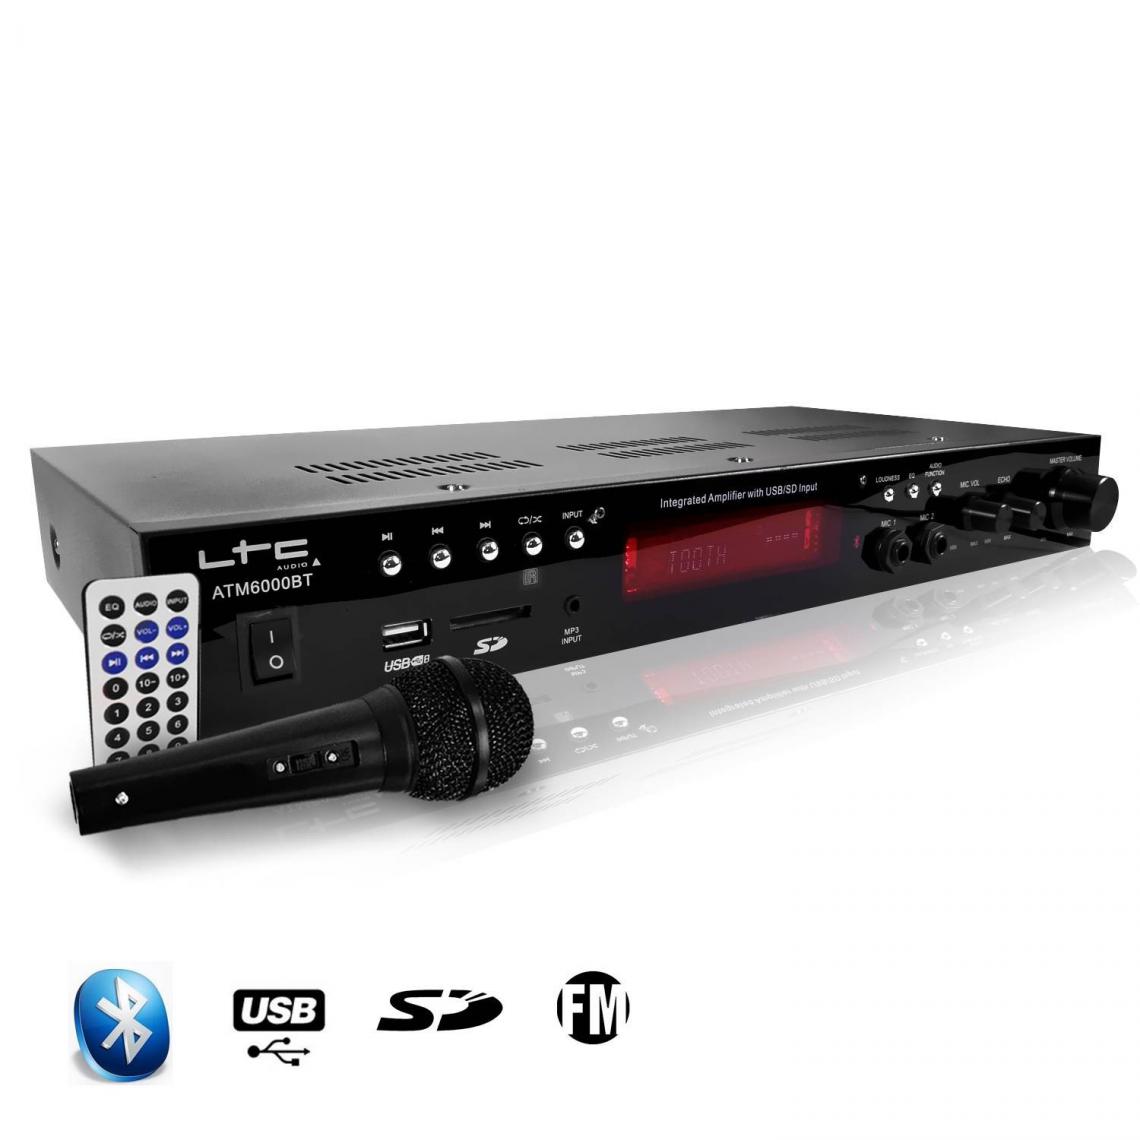 Ltc Audio - Amplificateur HIFI stéréo KARAOKE 2x50W - BLUETOOTH/USB/SD/FM + Microphone noir - Ampli